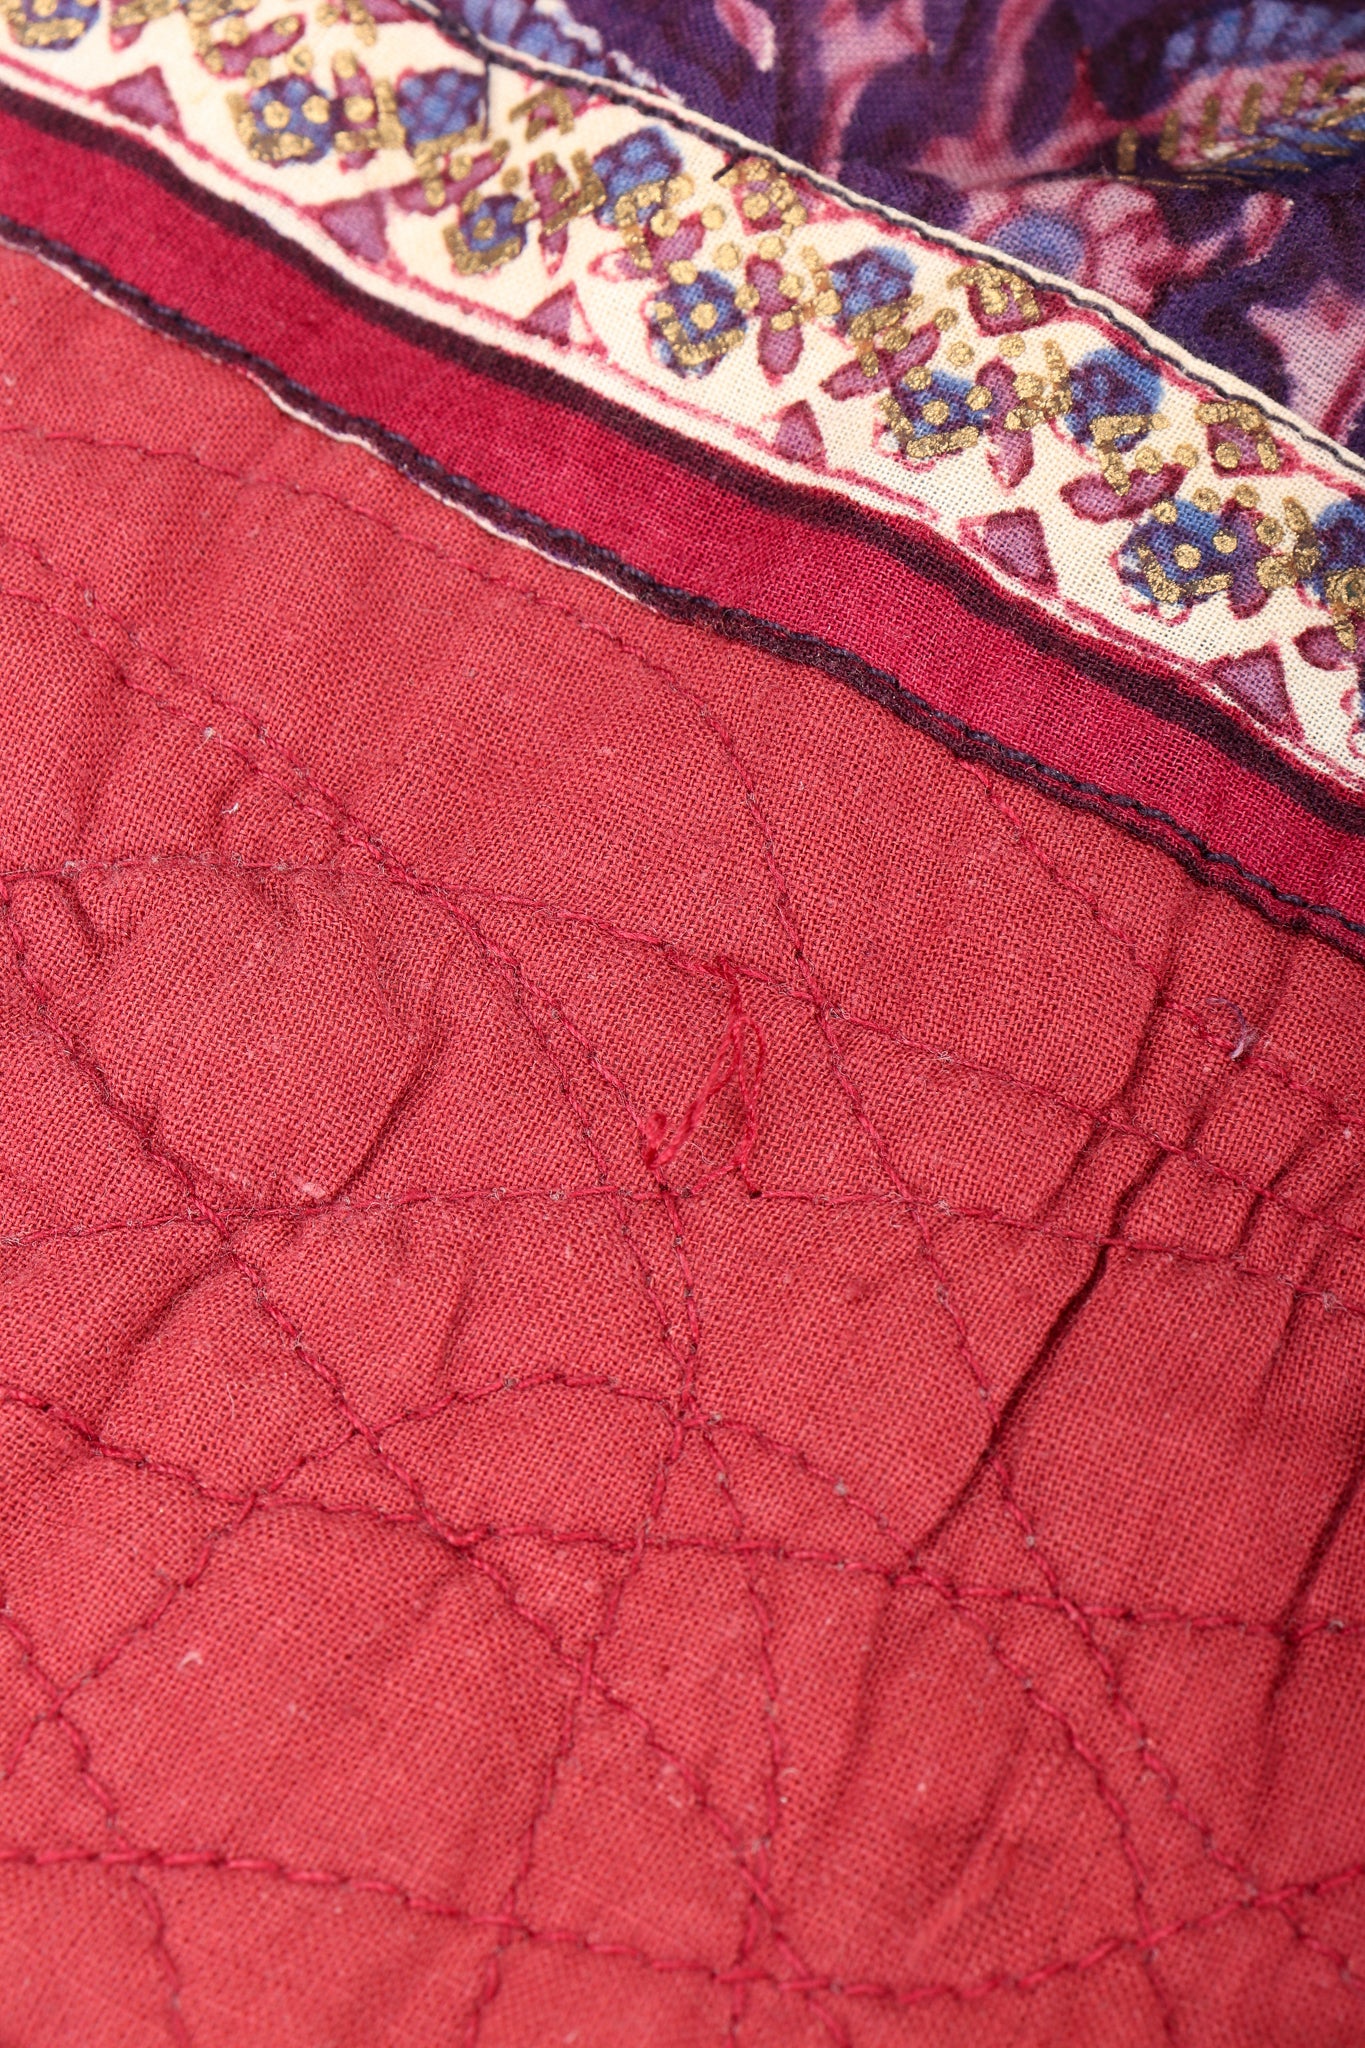 Vintage Pool India Cotton Gauze Quilted Yoke Dress loose threads at hem